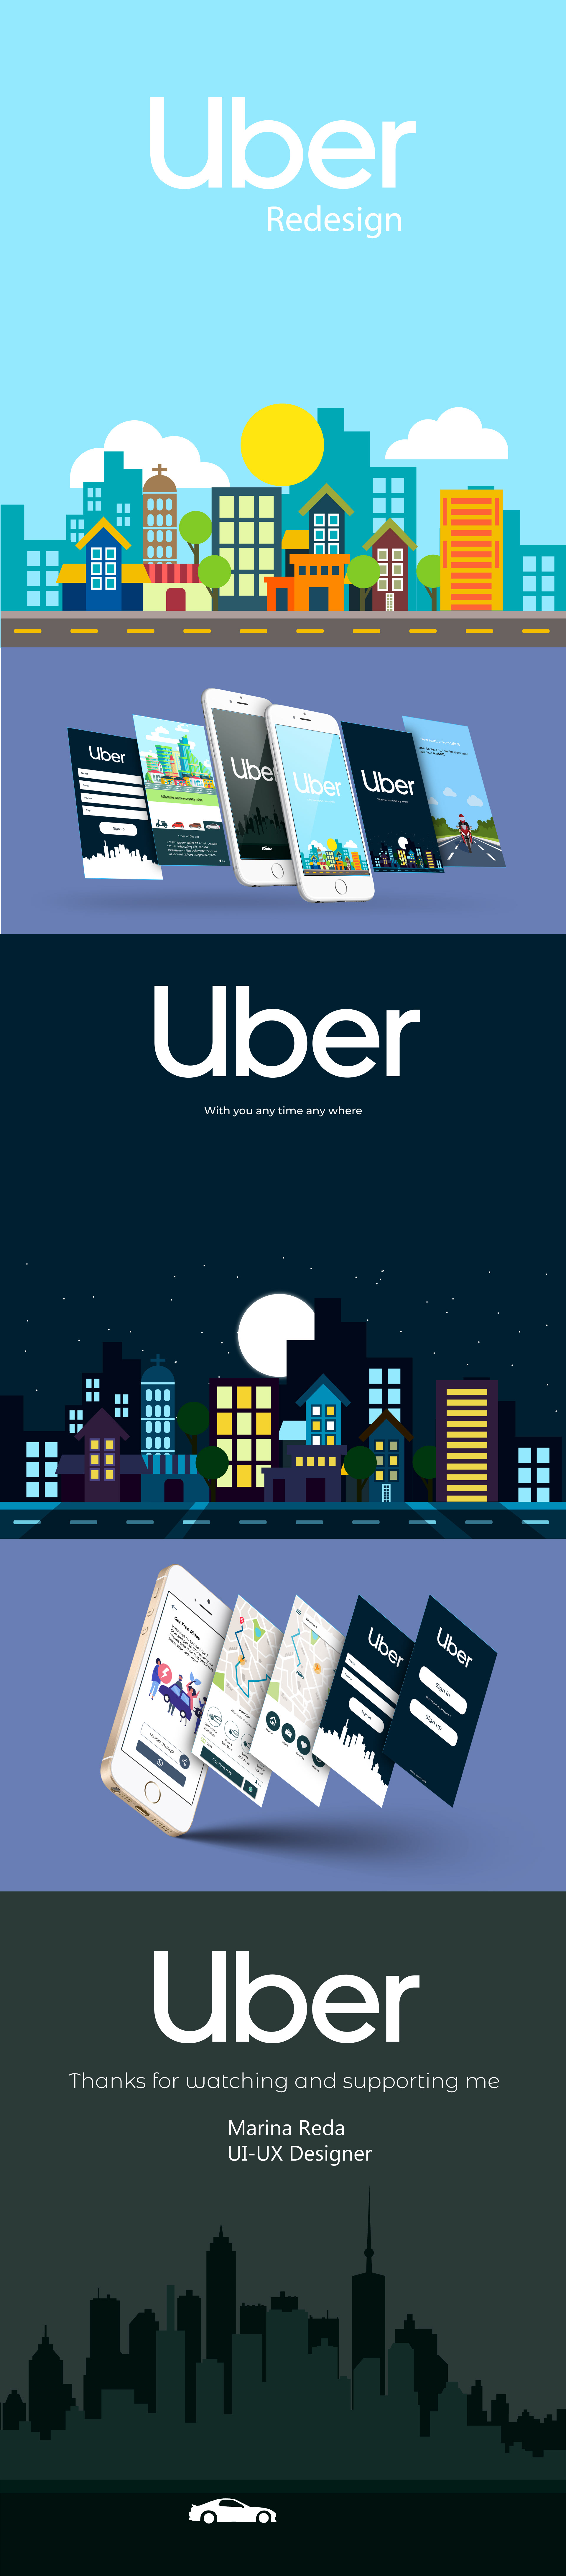 uber redesign case study